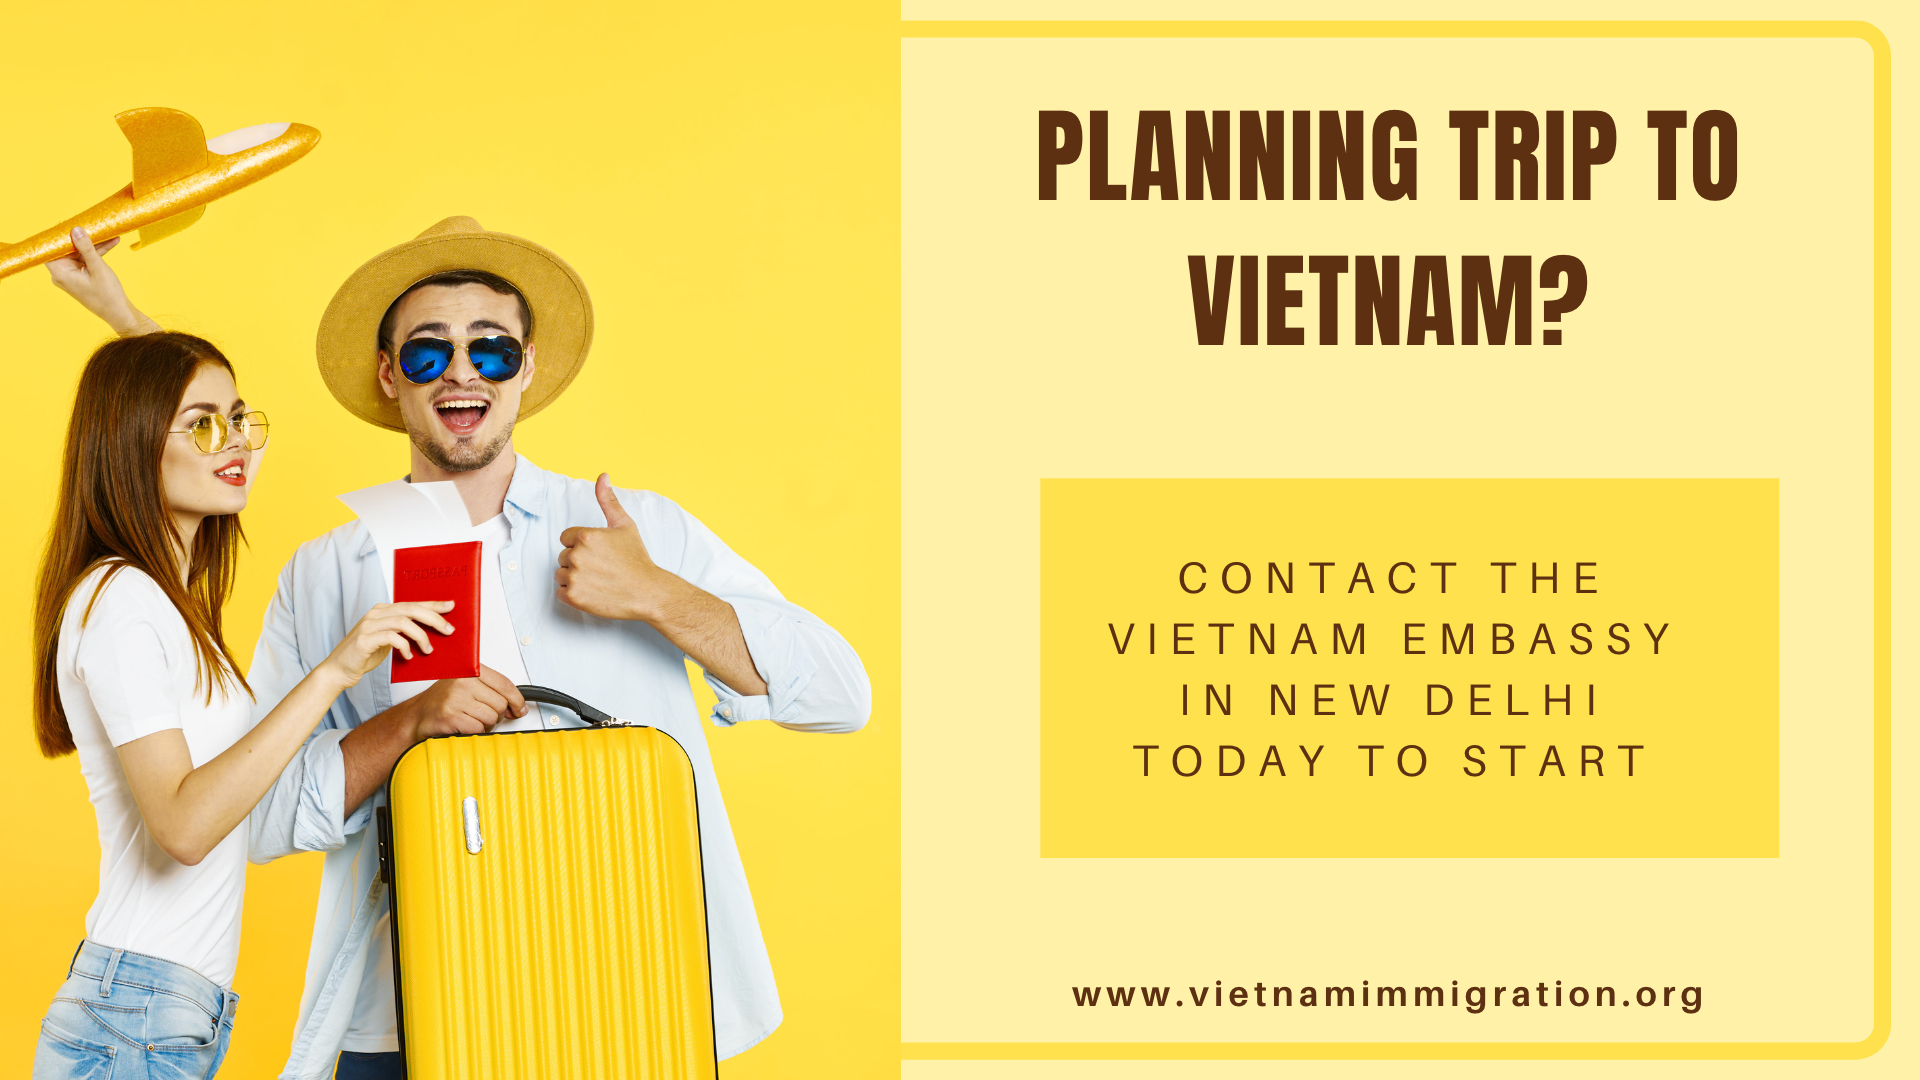 Planning trip to Vietnam? Contact the Vietnam Embassy in New Delhi today to start